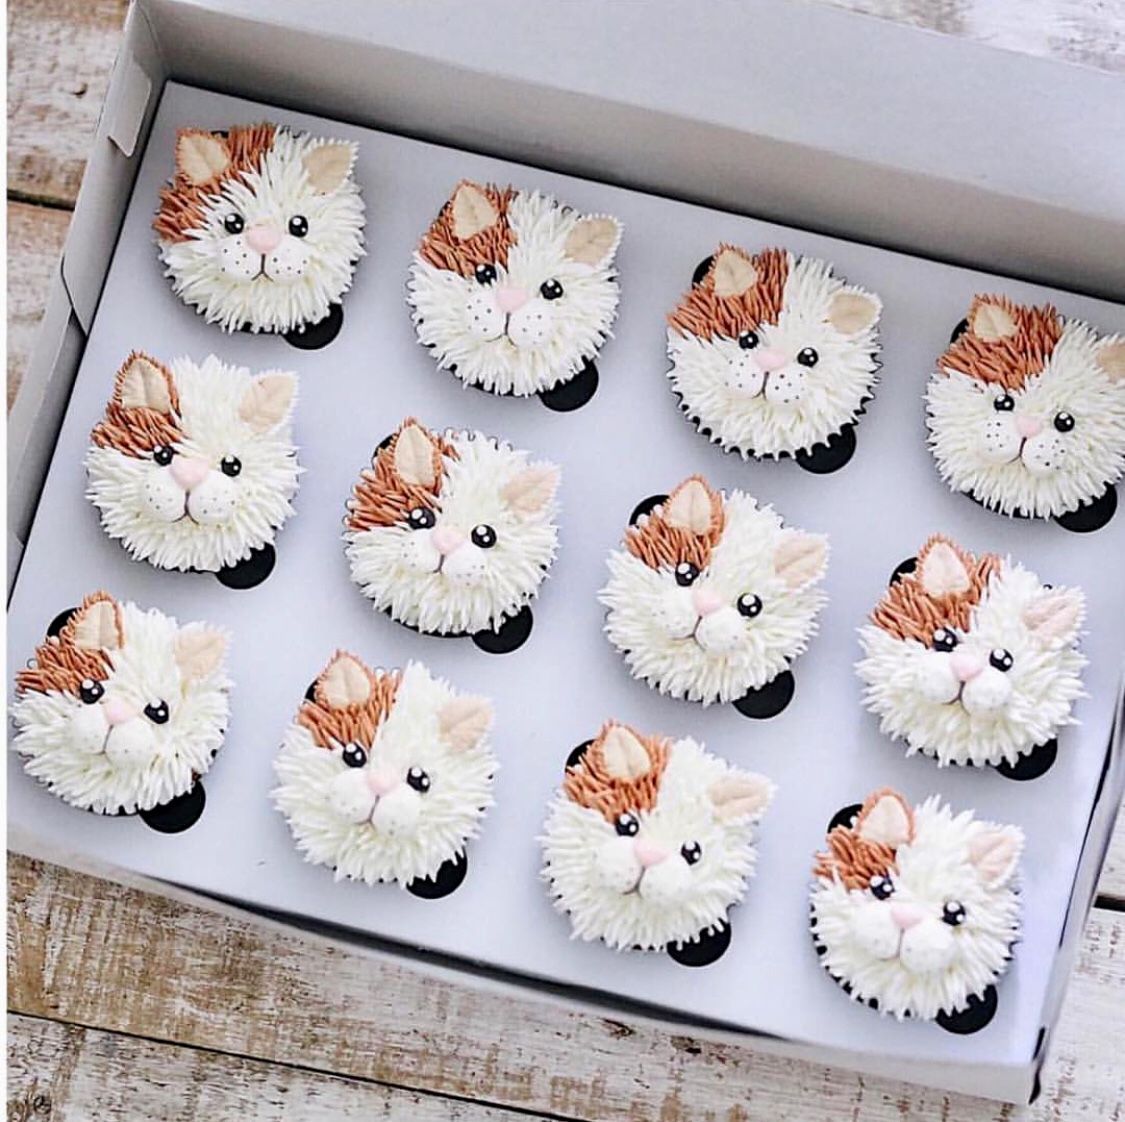 Cupcakes de gatitos